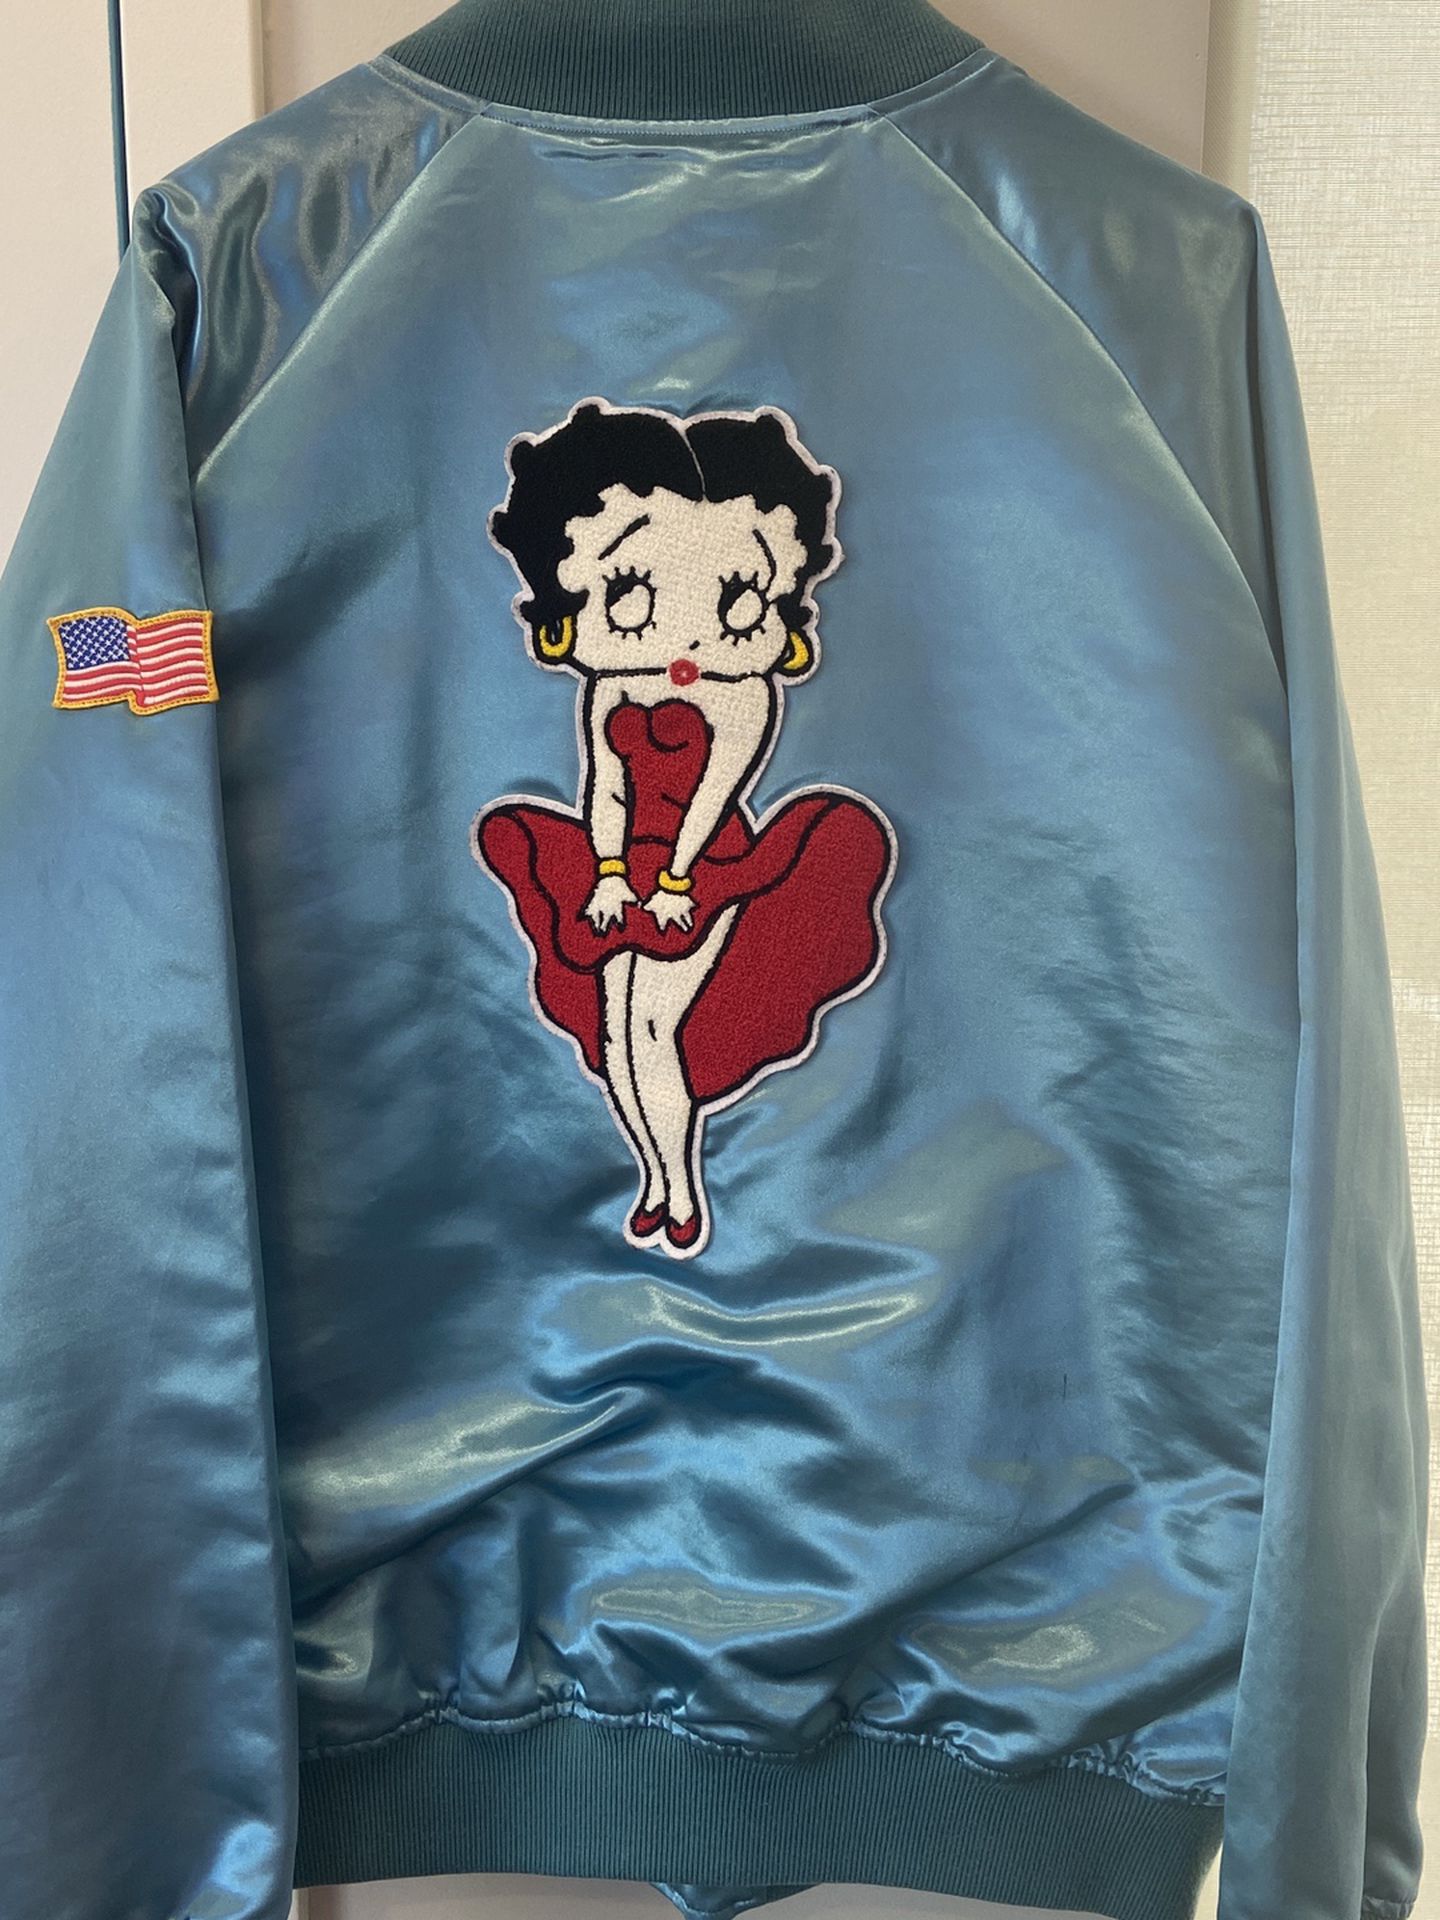 Betty Boop Supreme Jacket